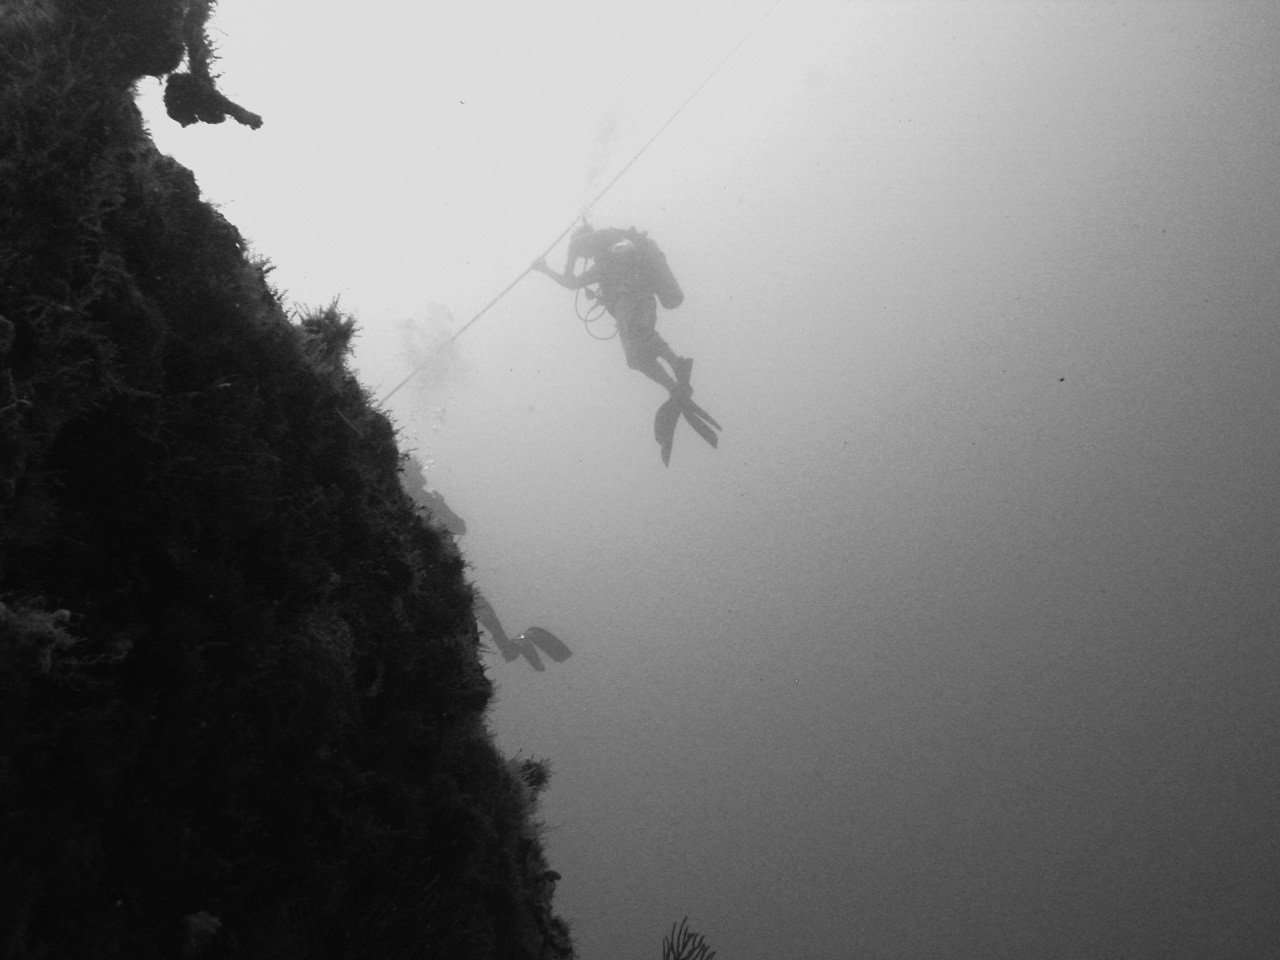 Diver on a line